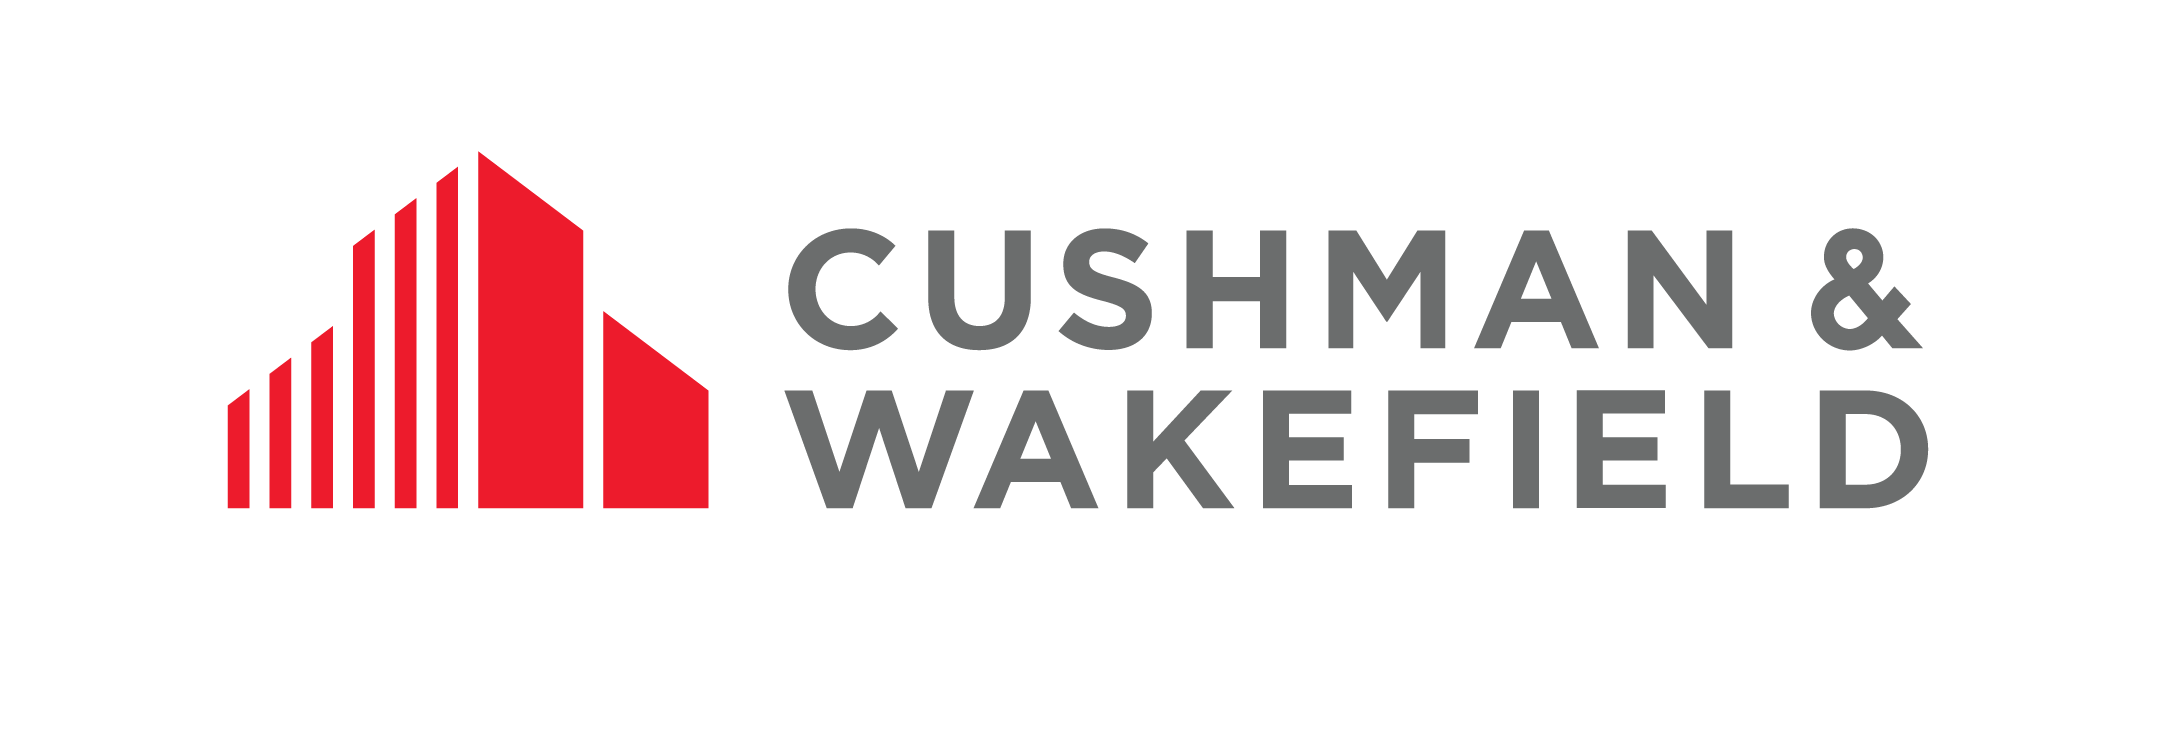 Cushman & Wakefield Company Logo